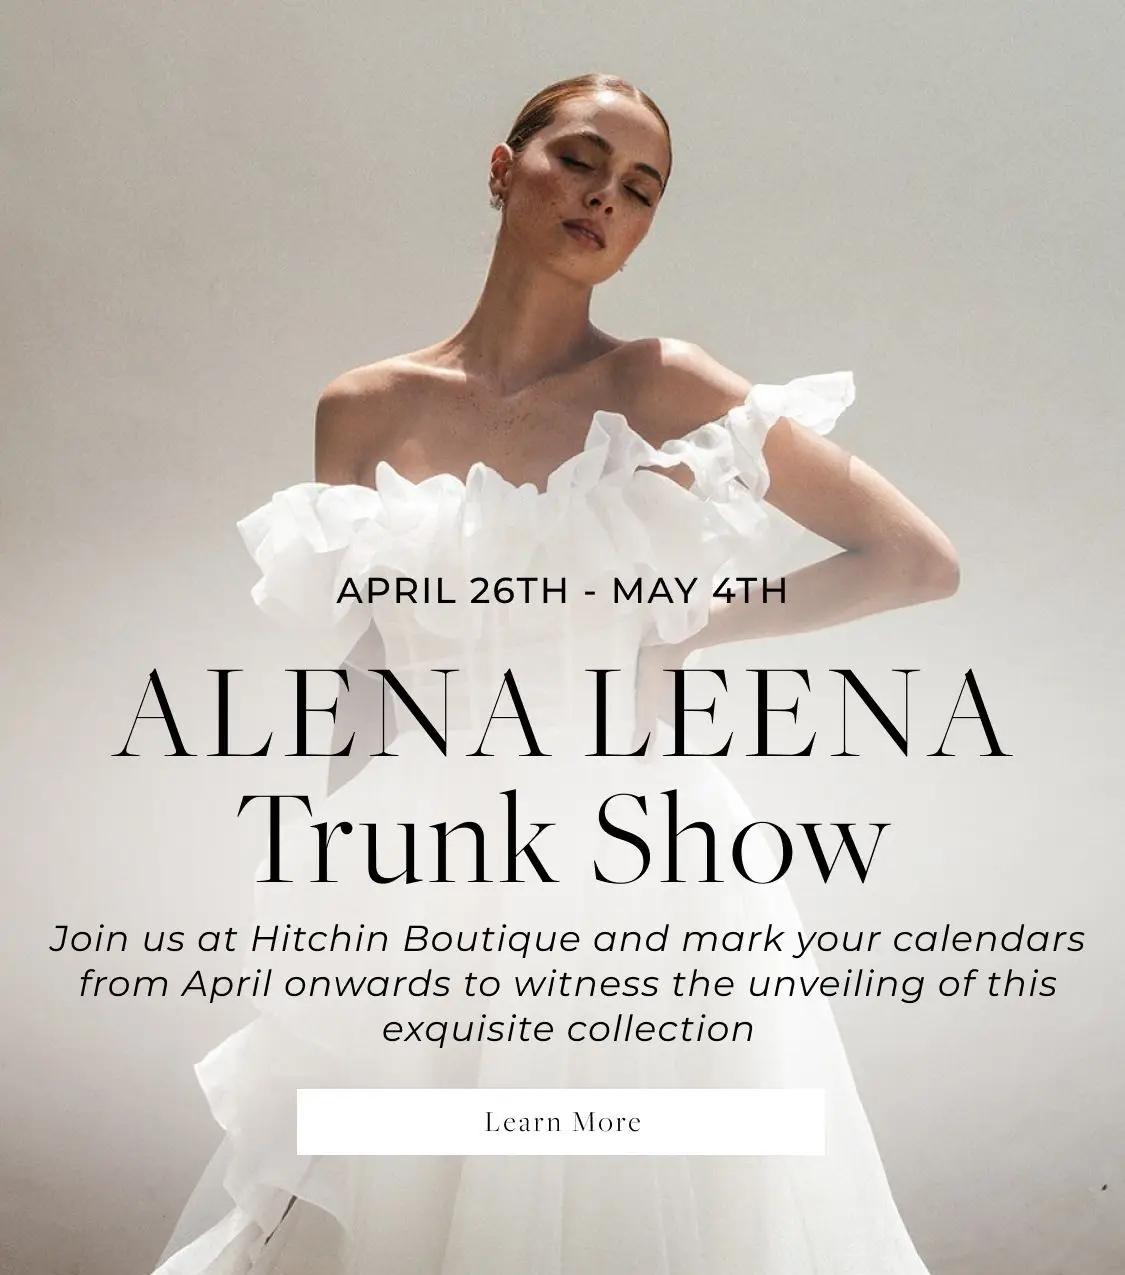 Alena Leena Trunk Show mobile banner